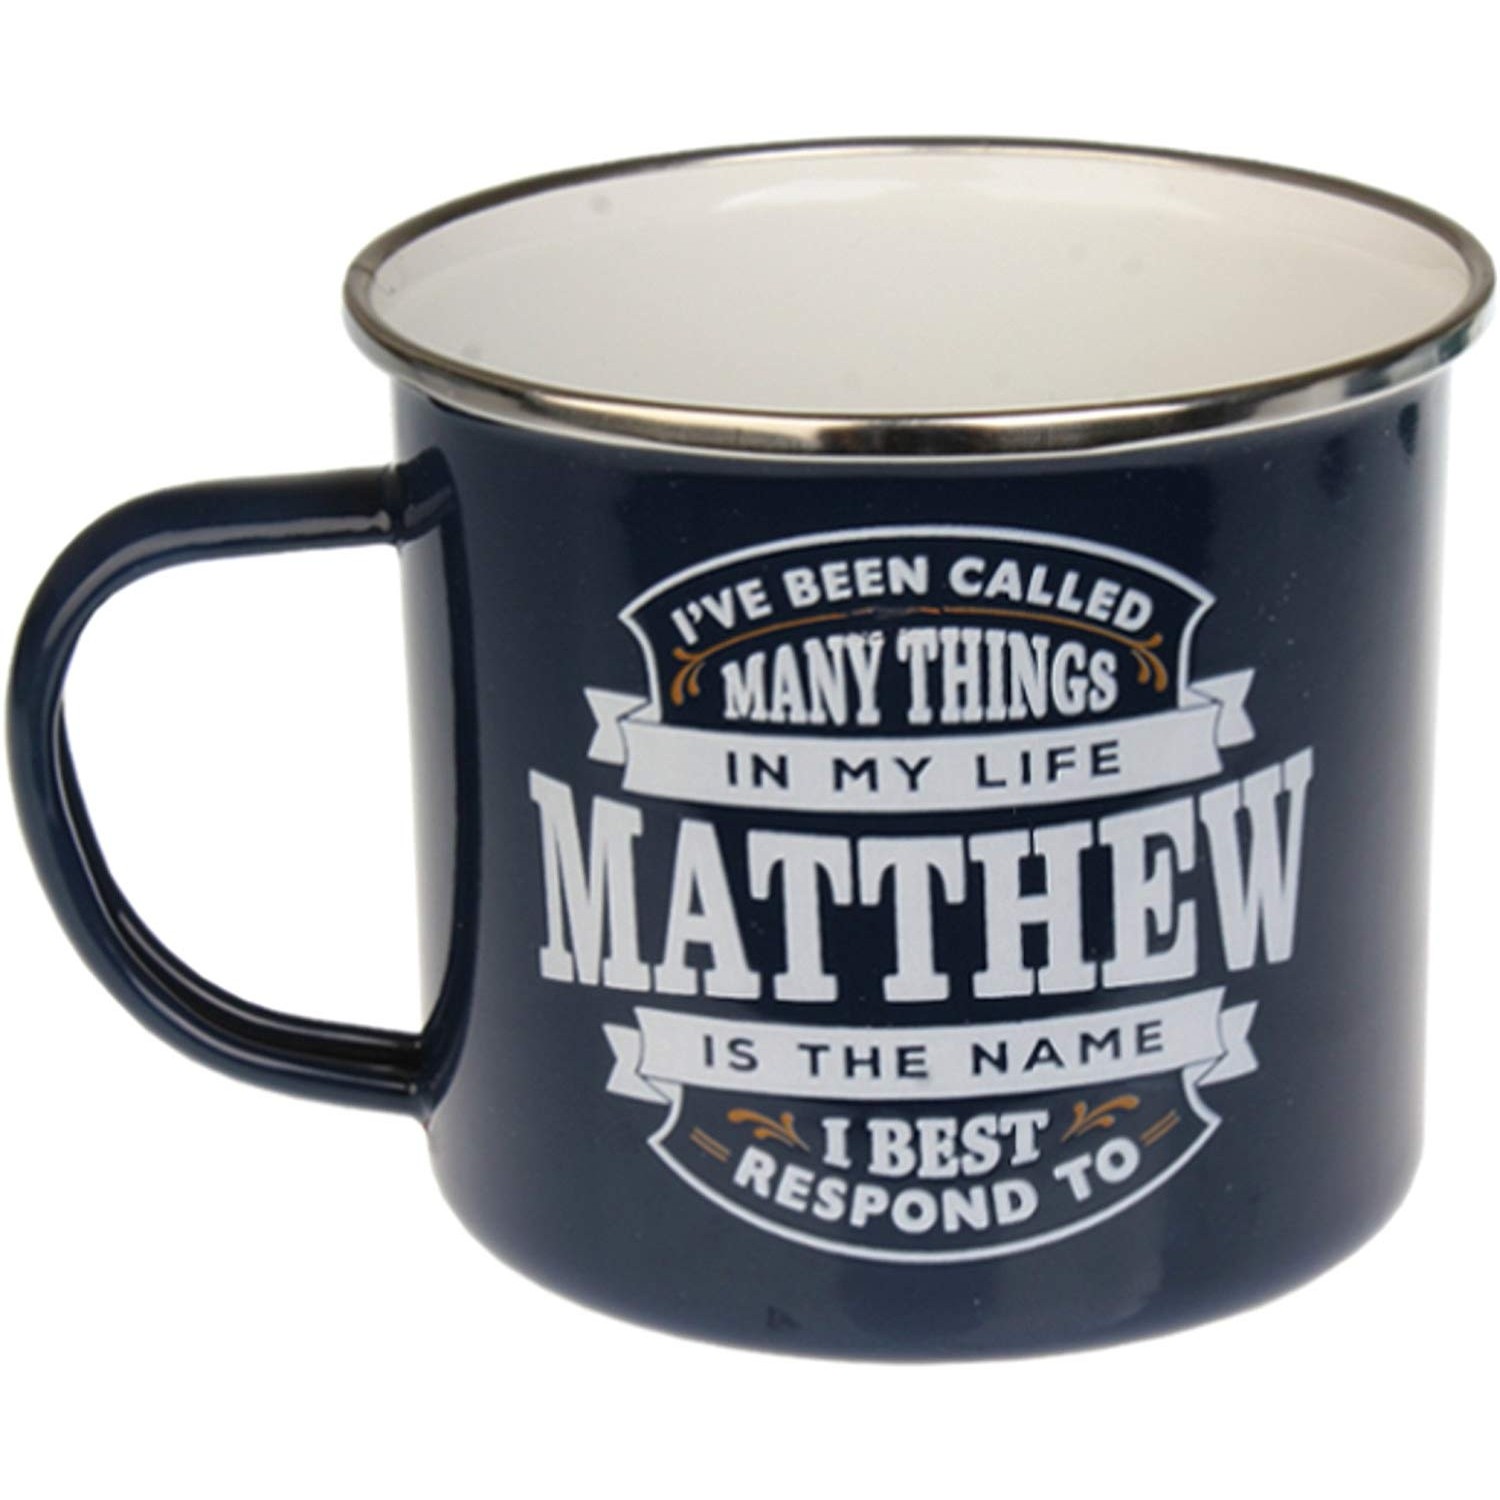 Top Guy Enamel Mugs (Matthew)